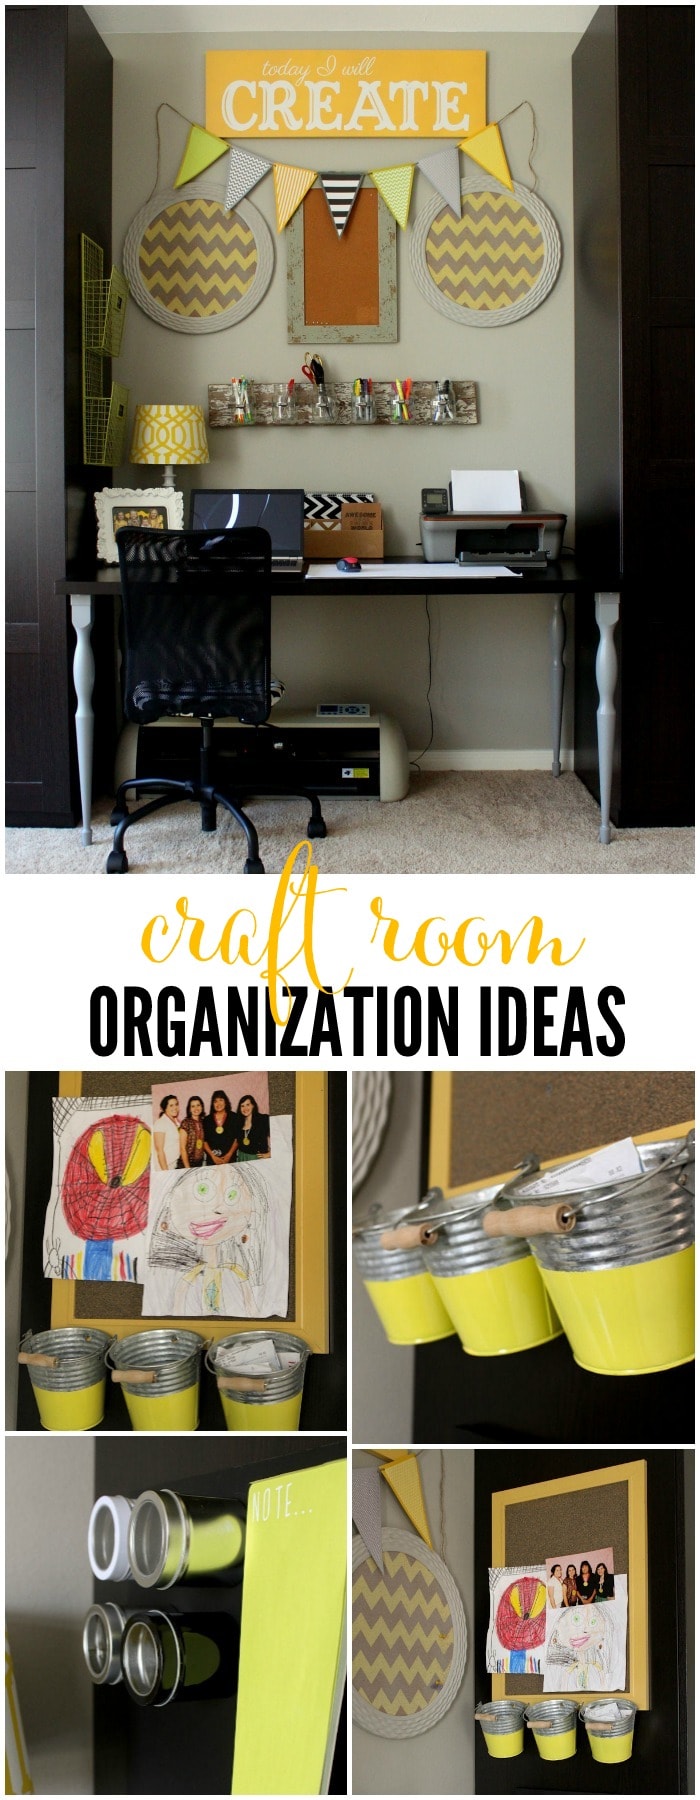 Craft Room Organization Ideas { lilluna.com } Great ideas to help inspire your own organization!!